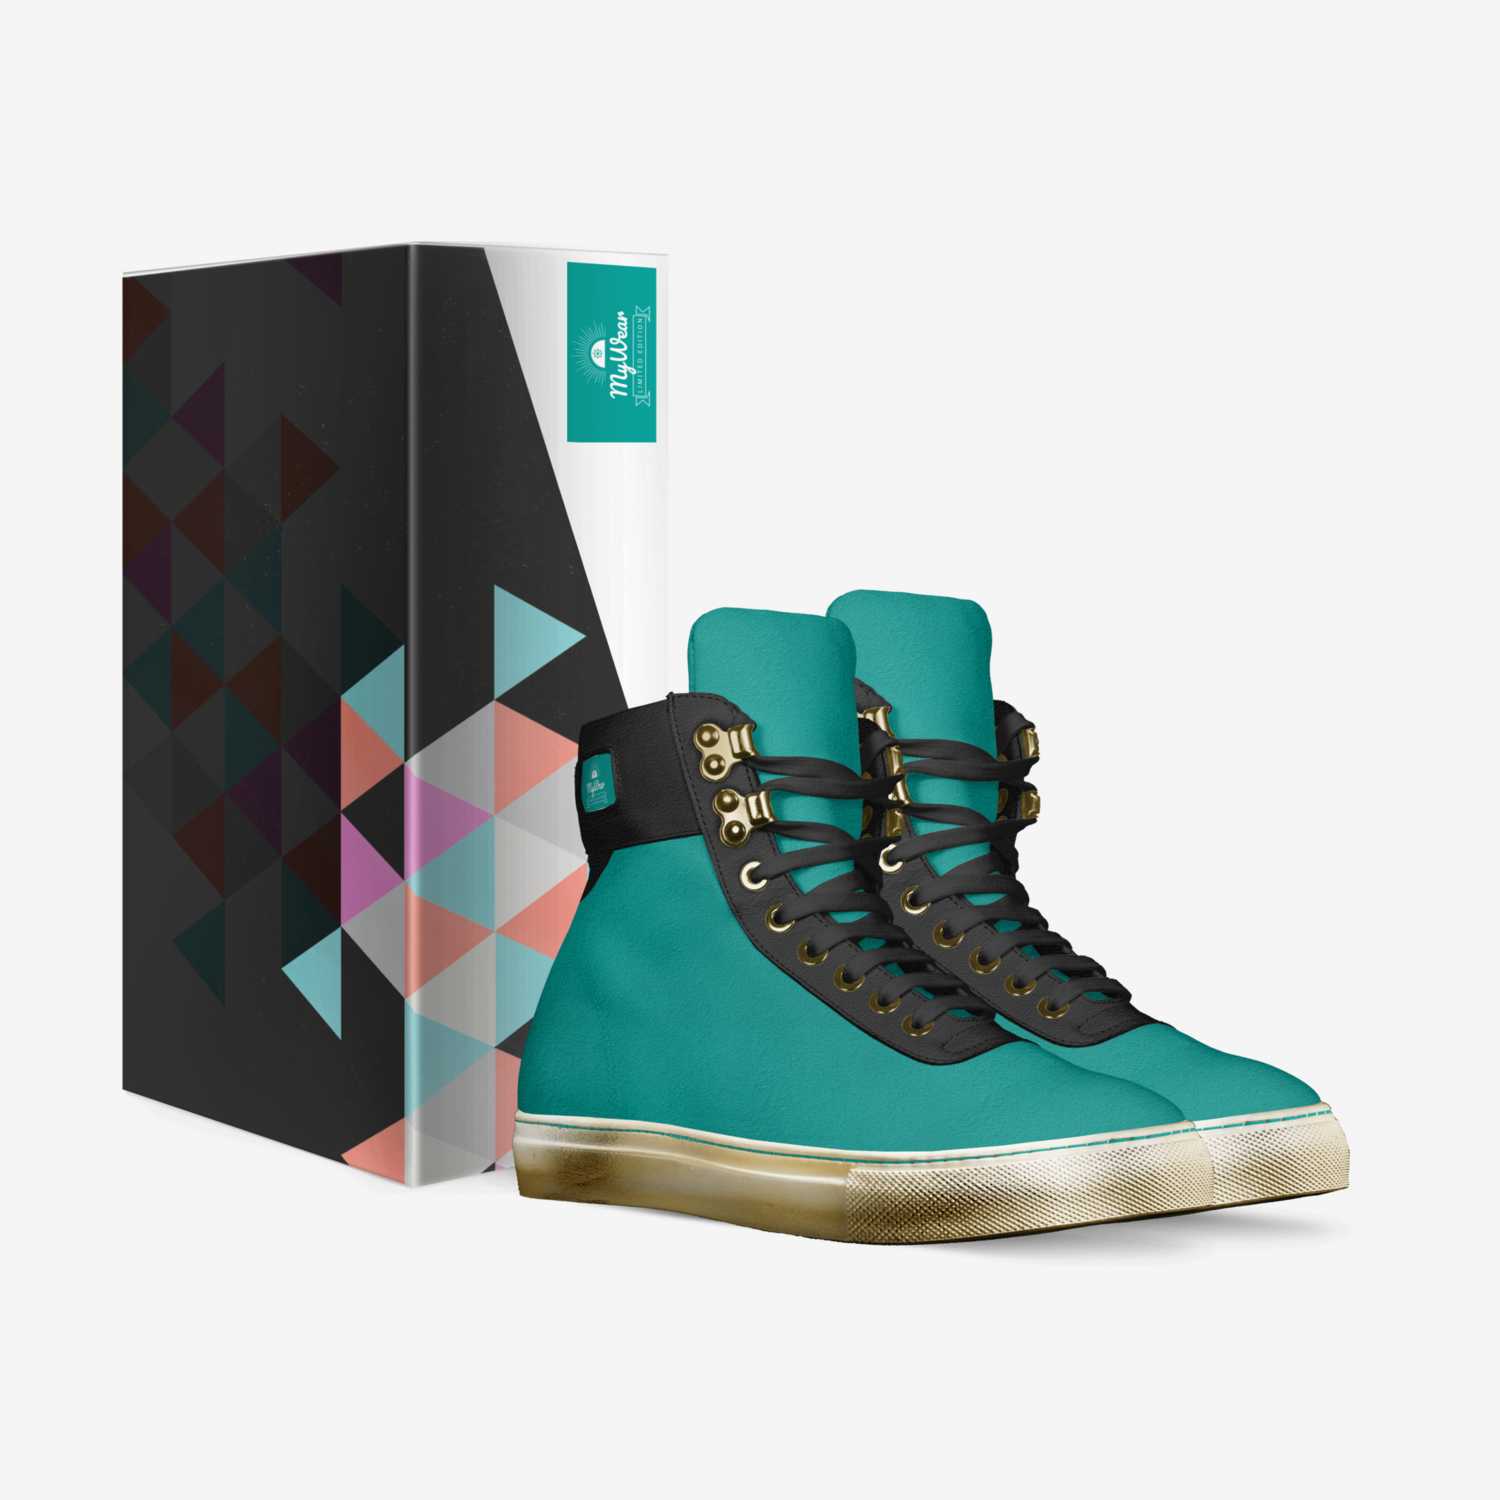 MyWear custom made in Italy shoes by Rashid X | Box view